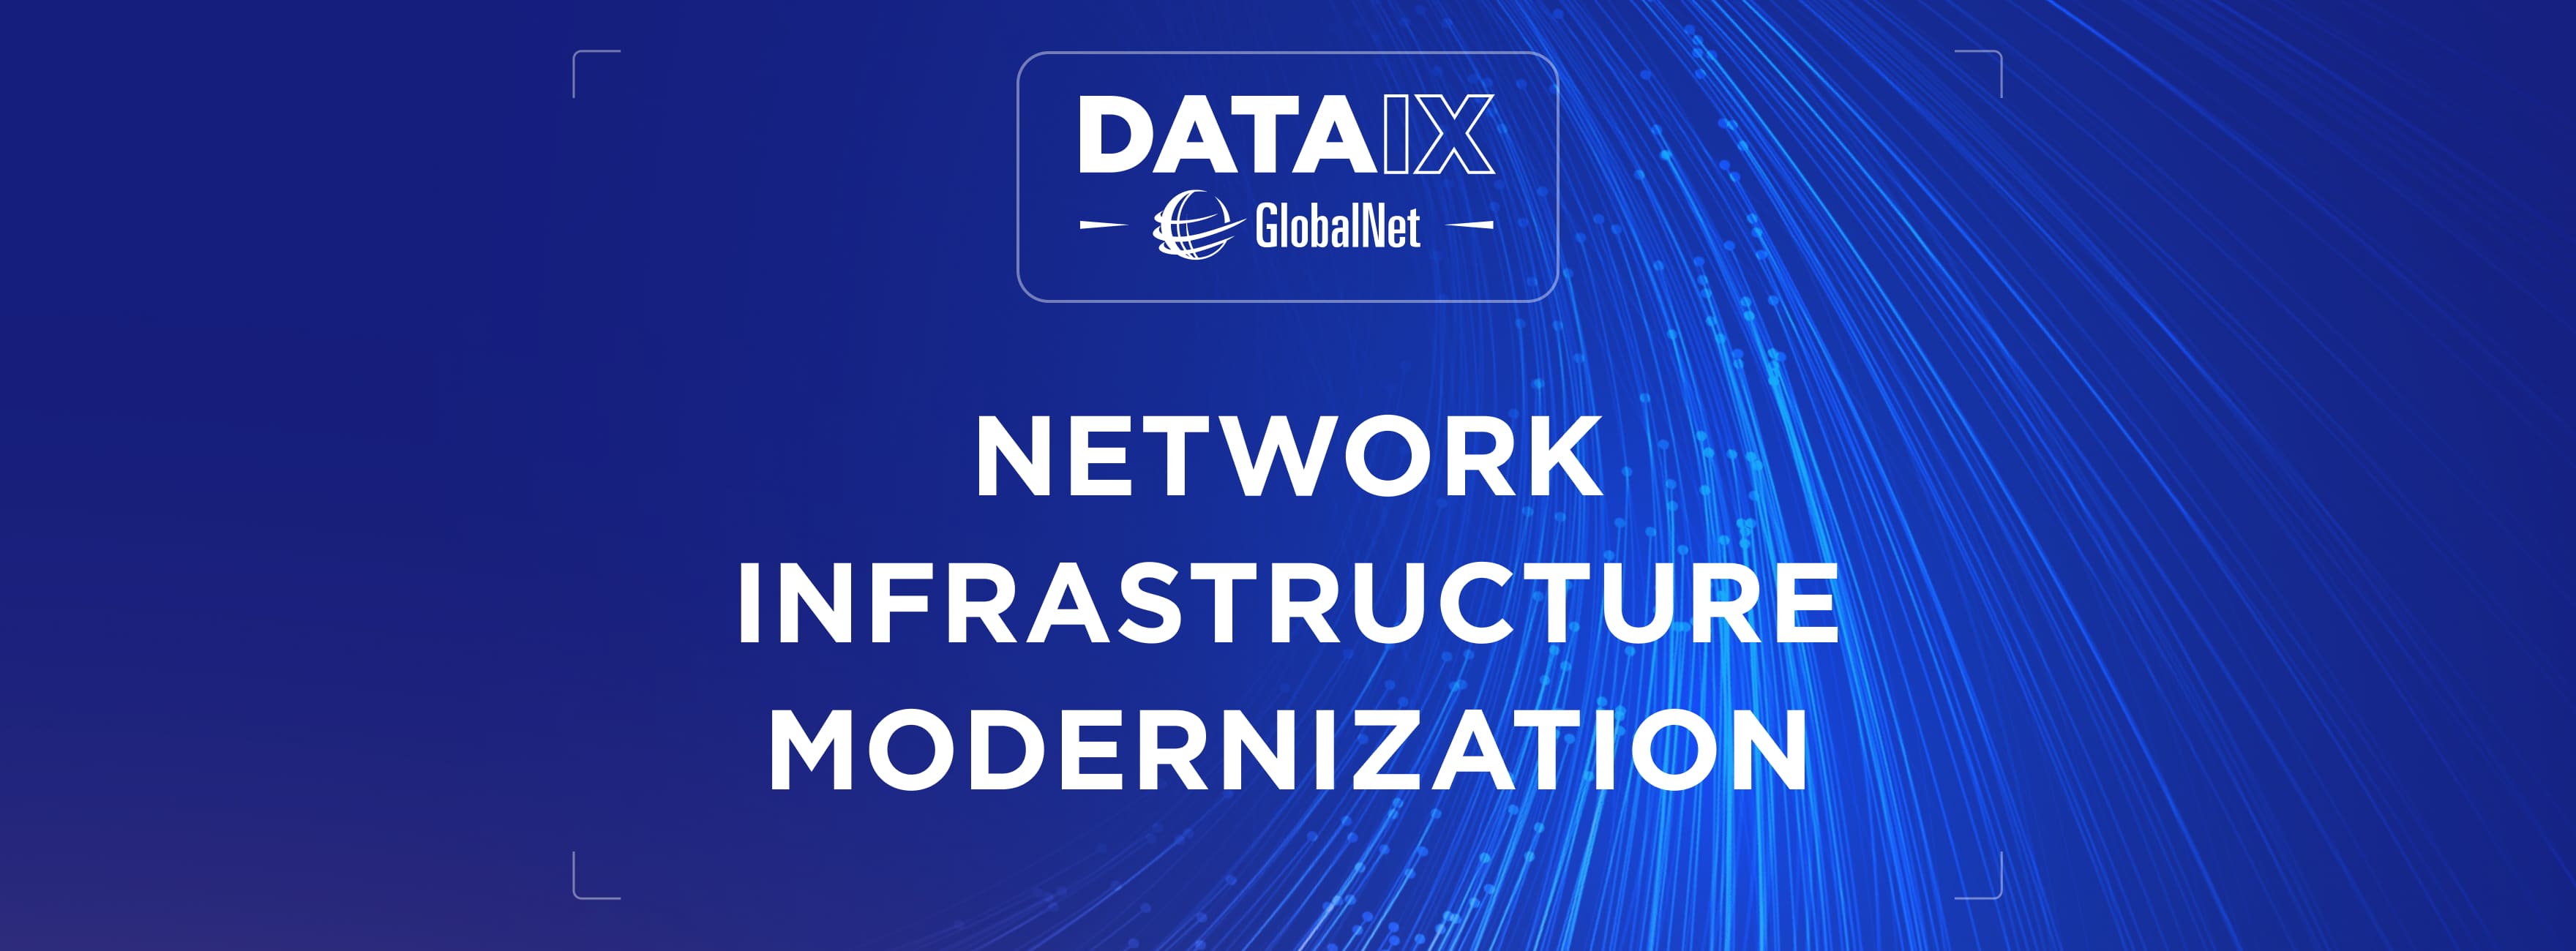 Backbone Network Infrastructure Modernization